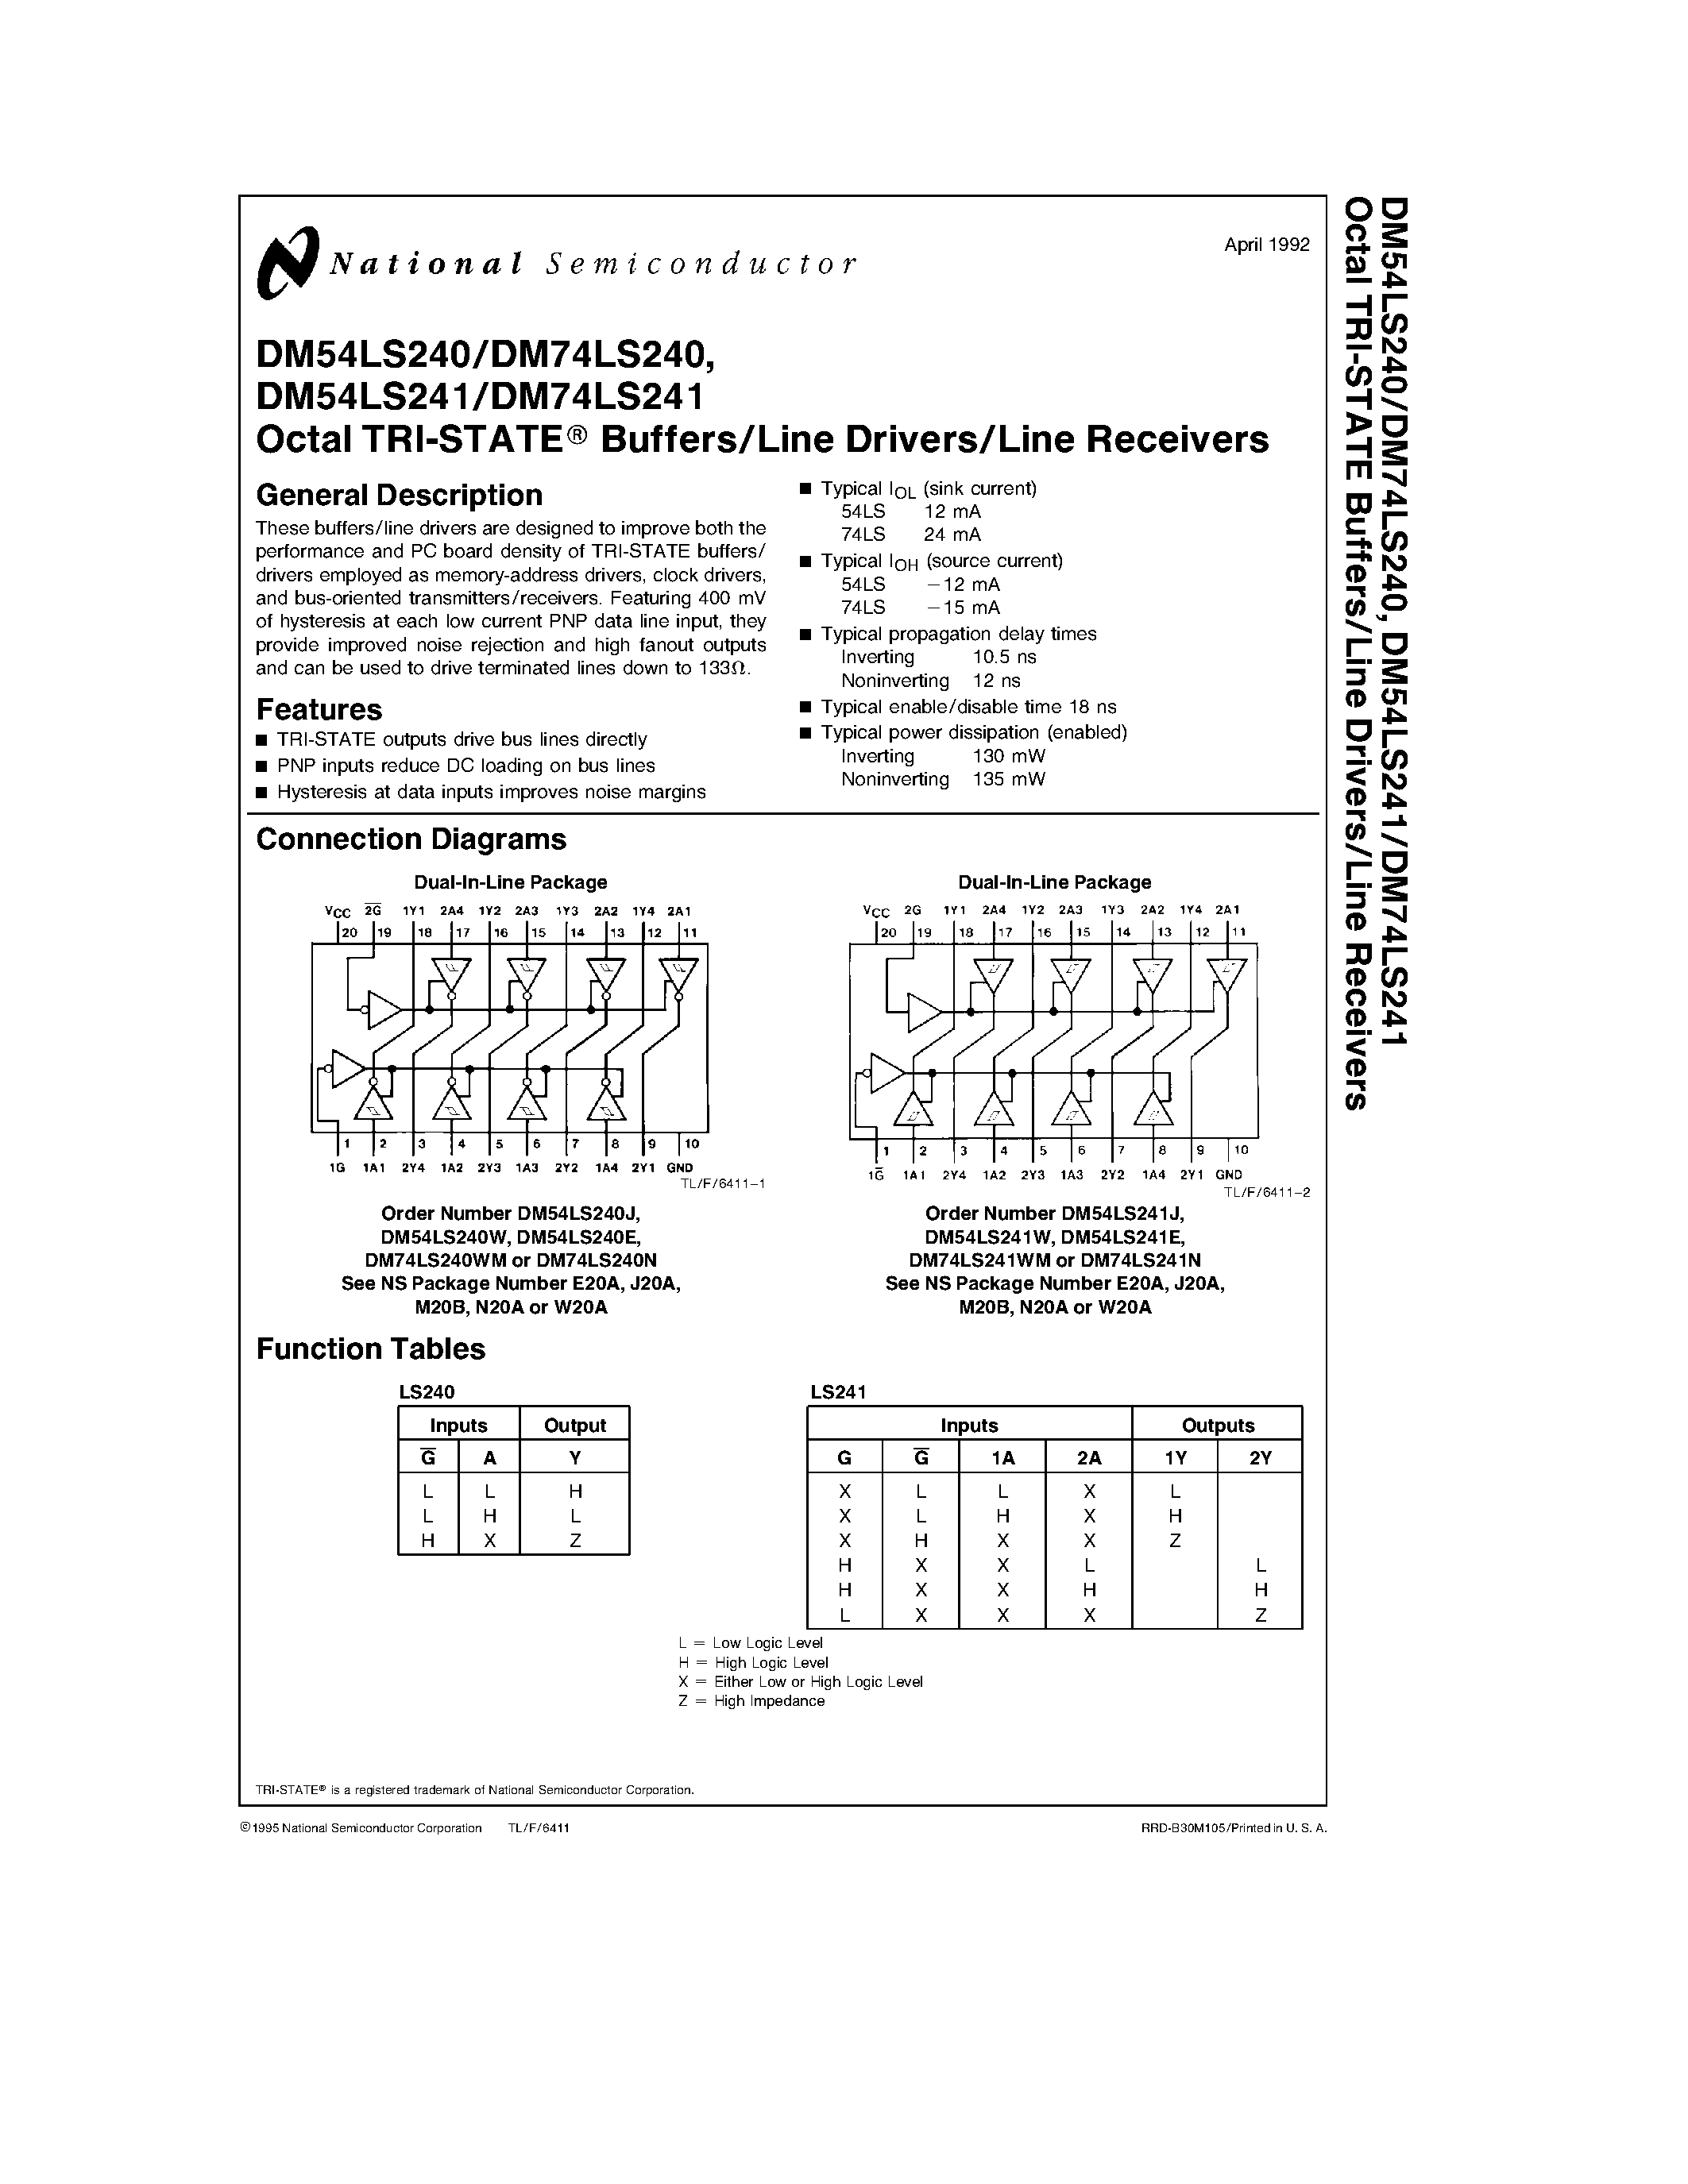 Datasheet DM74LS240 - (DM74LS240 / DM74LS241) Octal TRI-STATE Buffers/Line Drivers/Line Receivers page 1